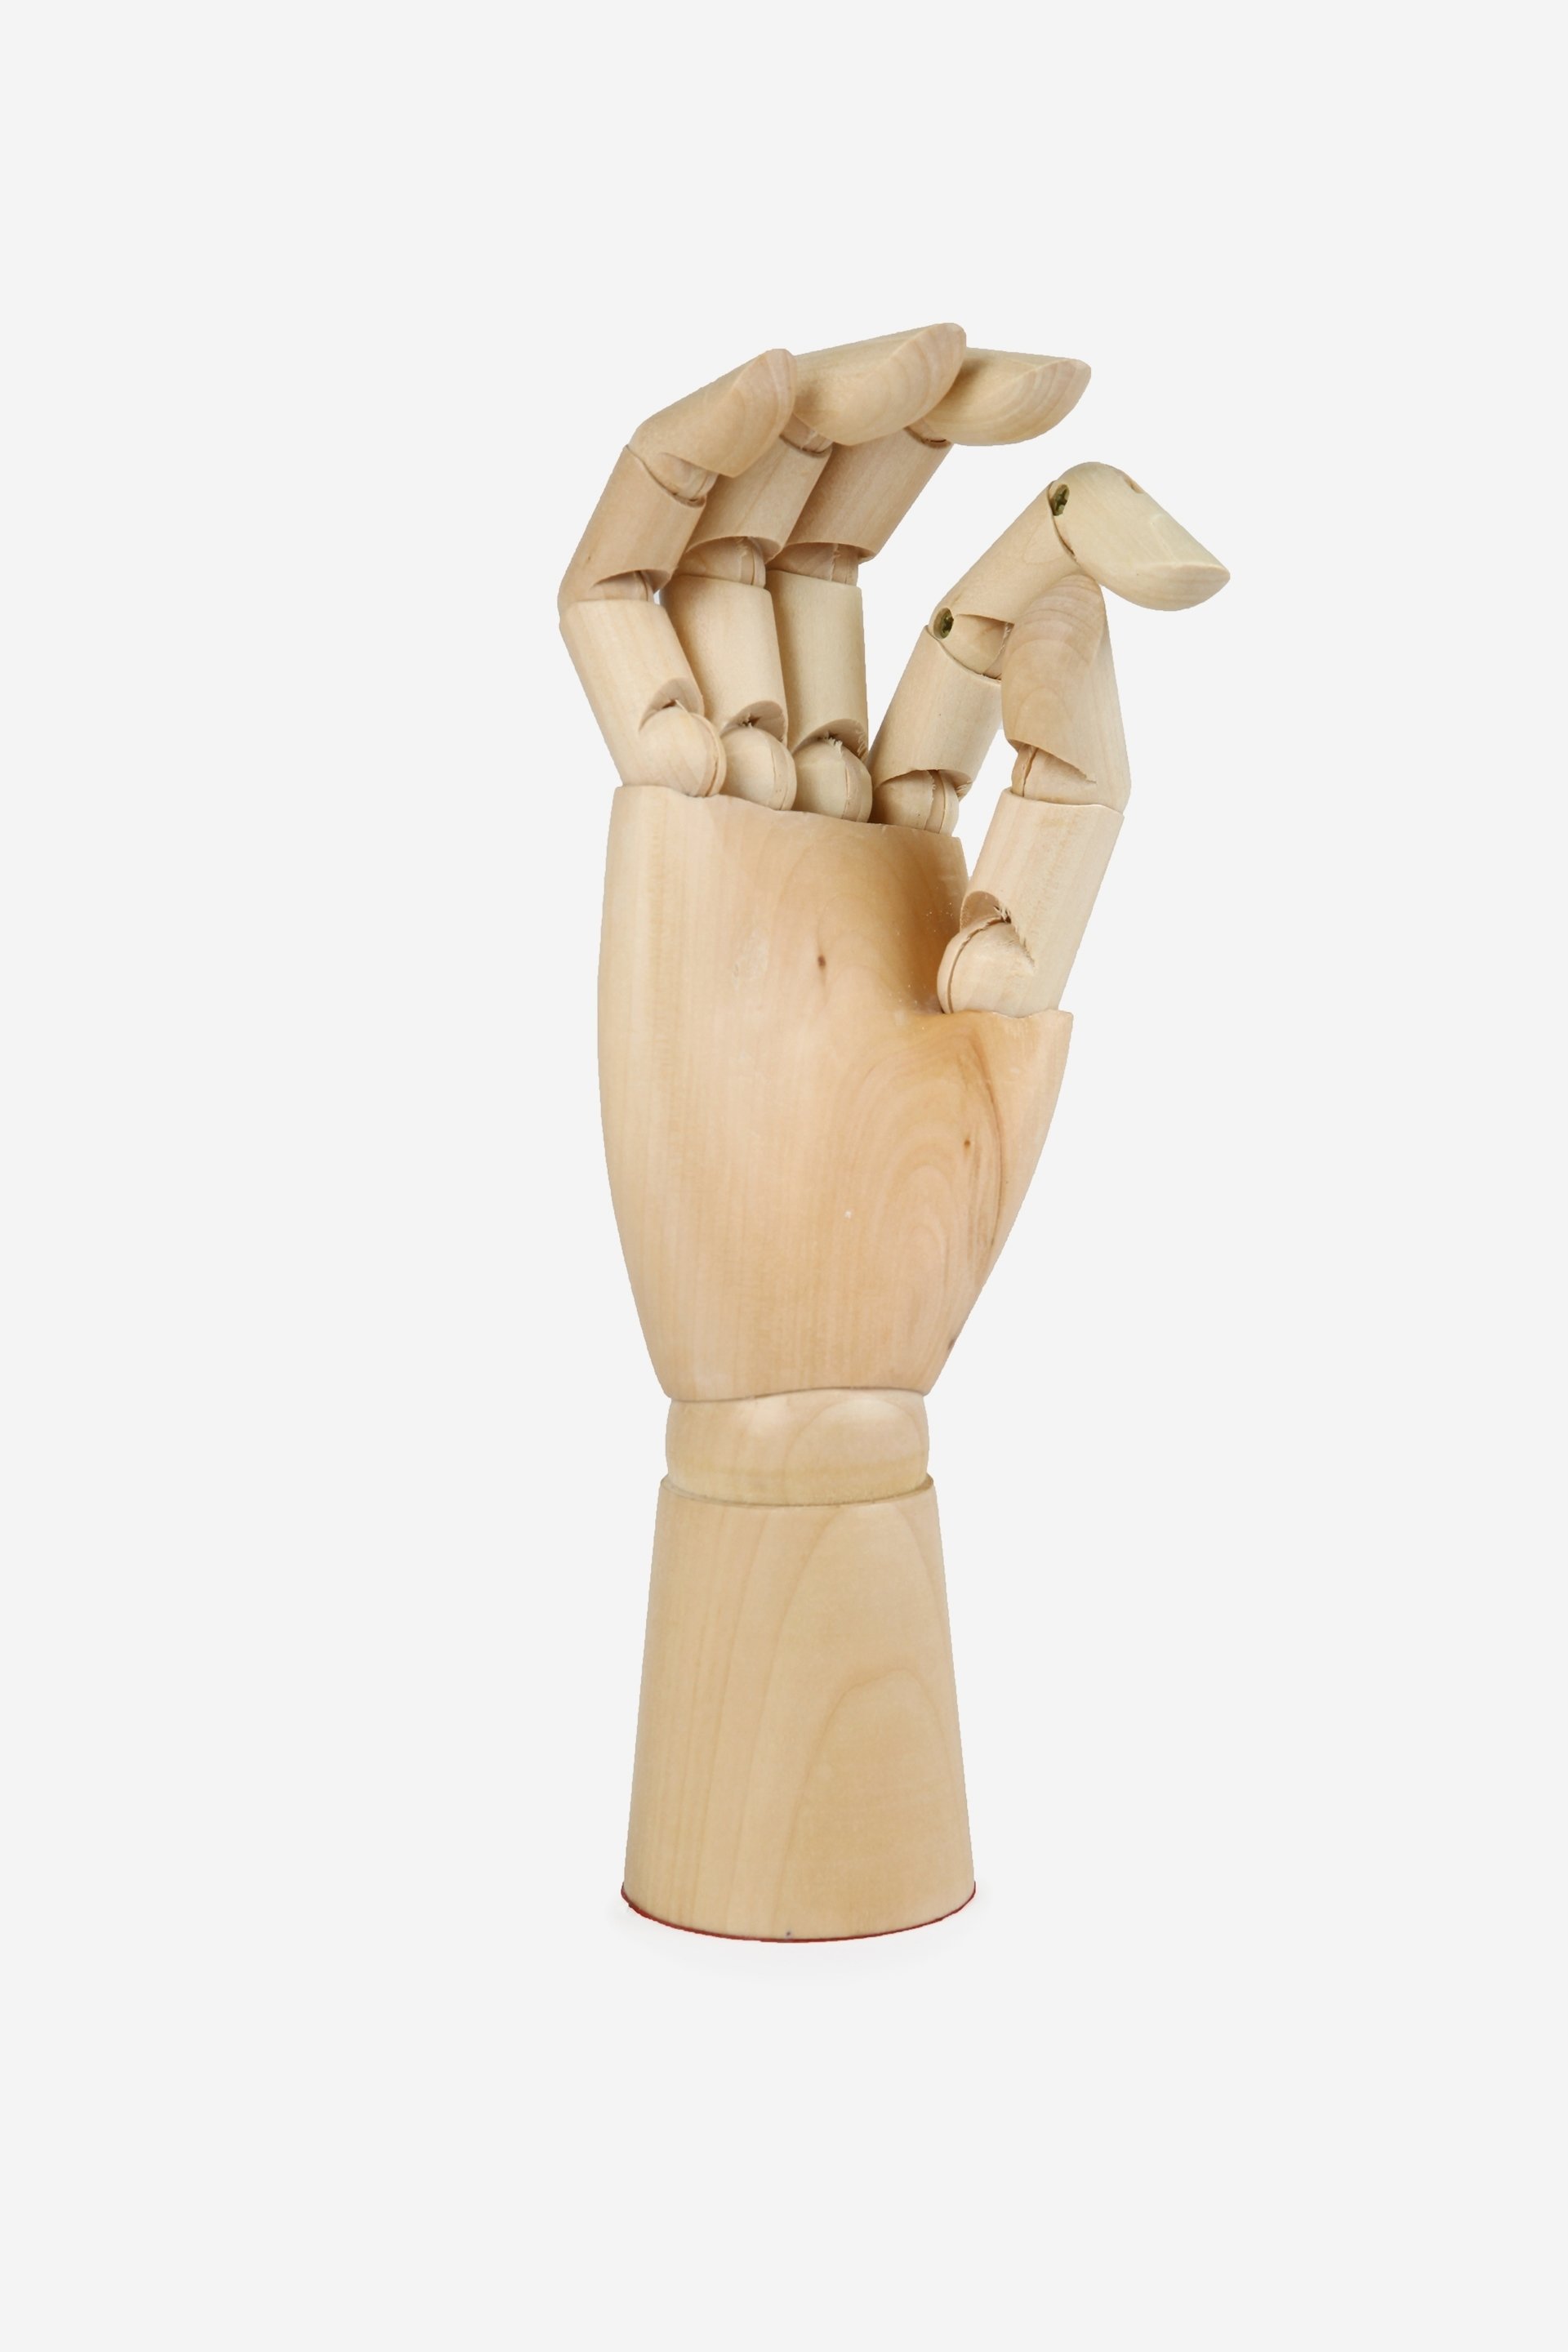 Typo - Manikin Hand - Wood